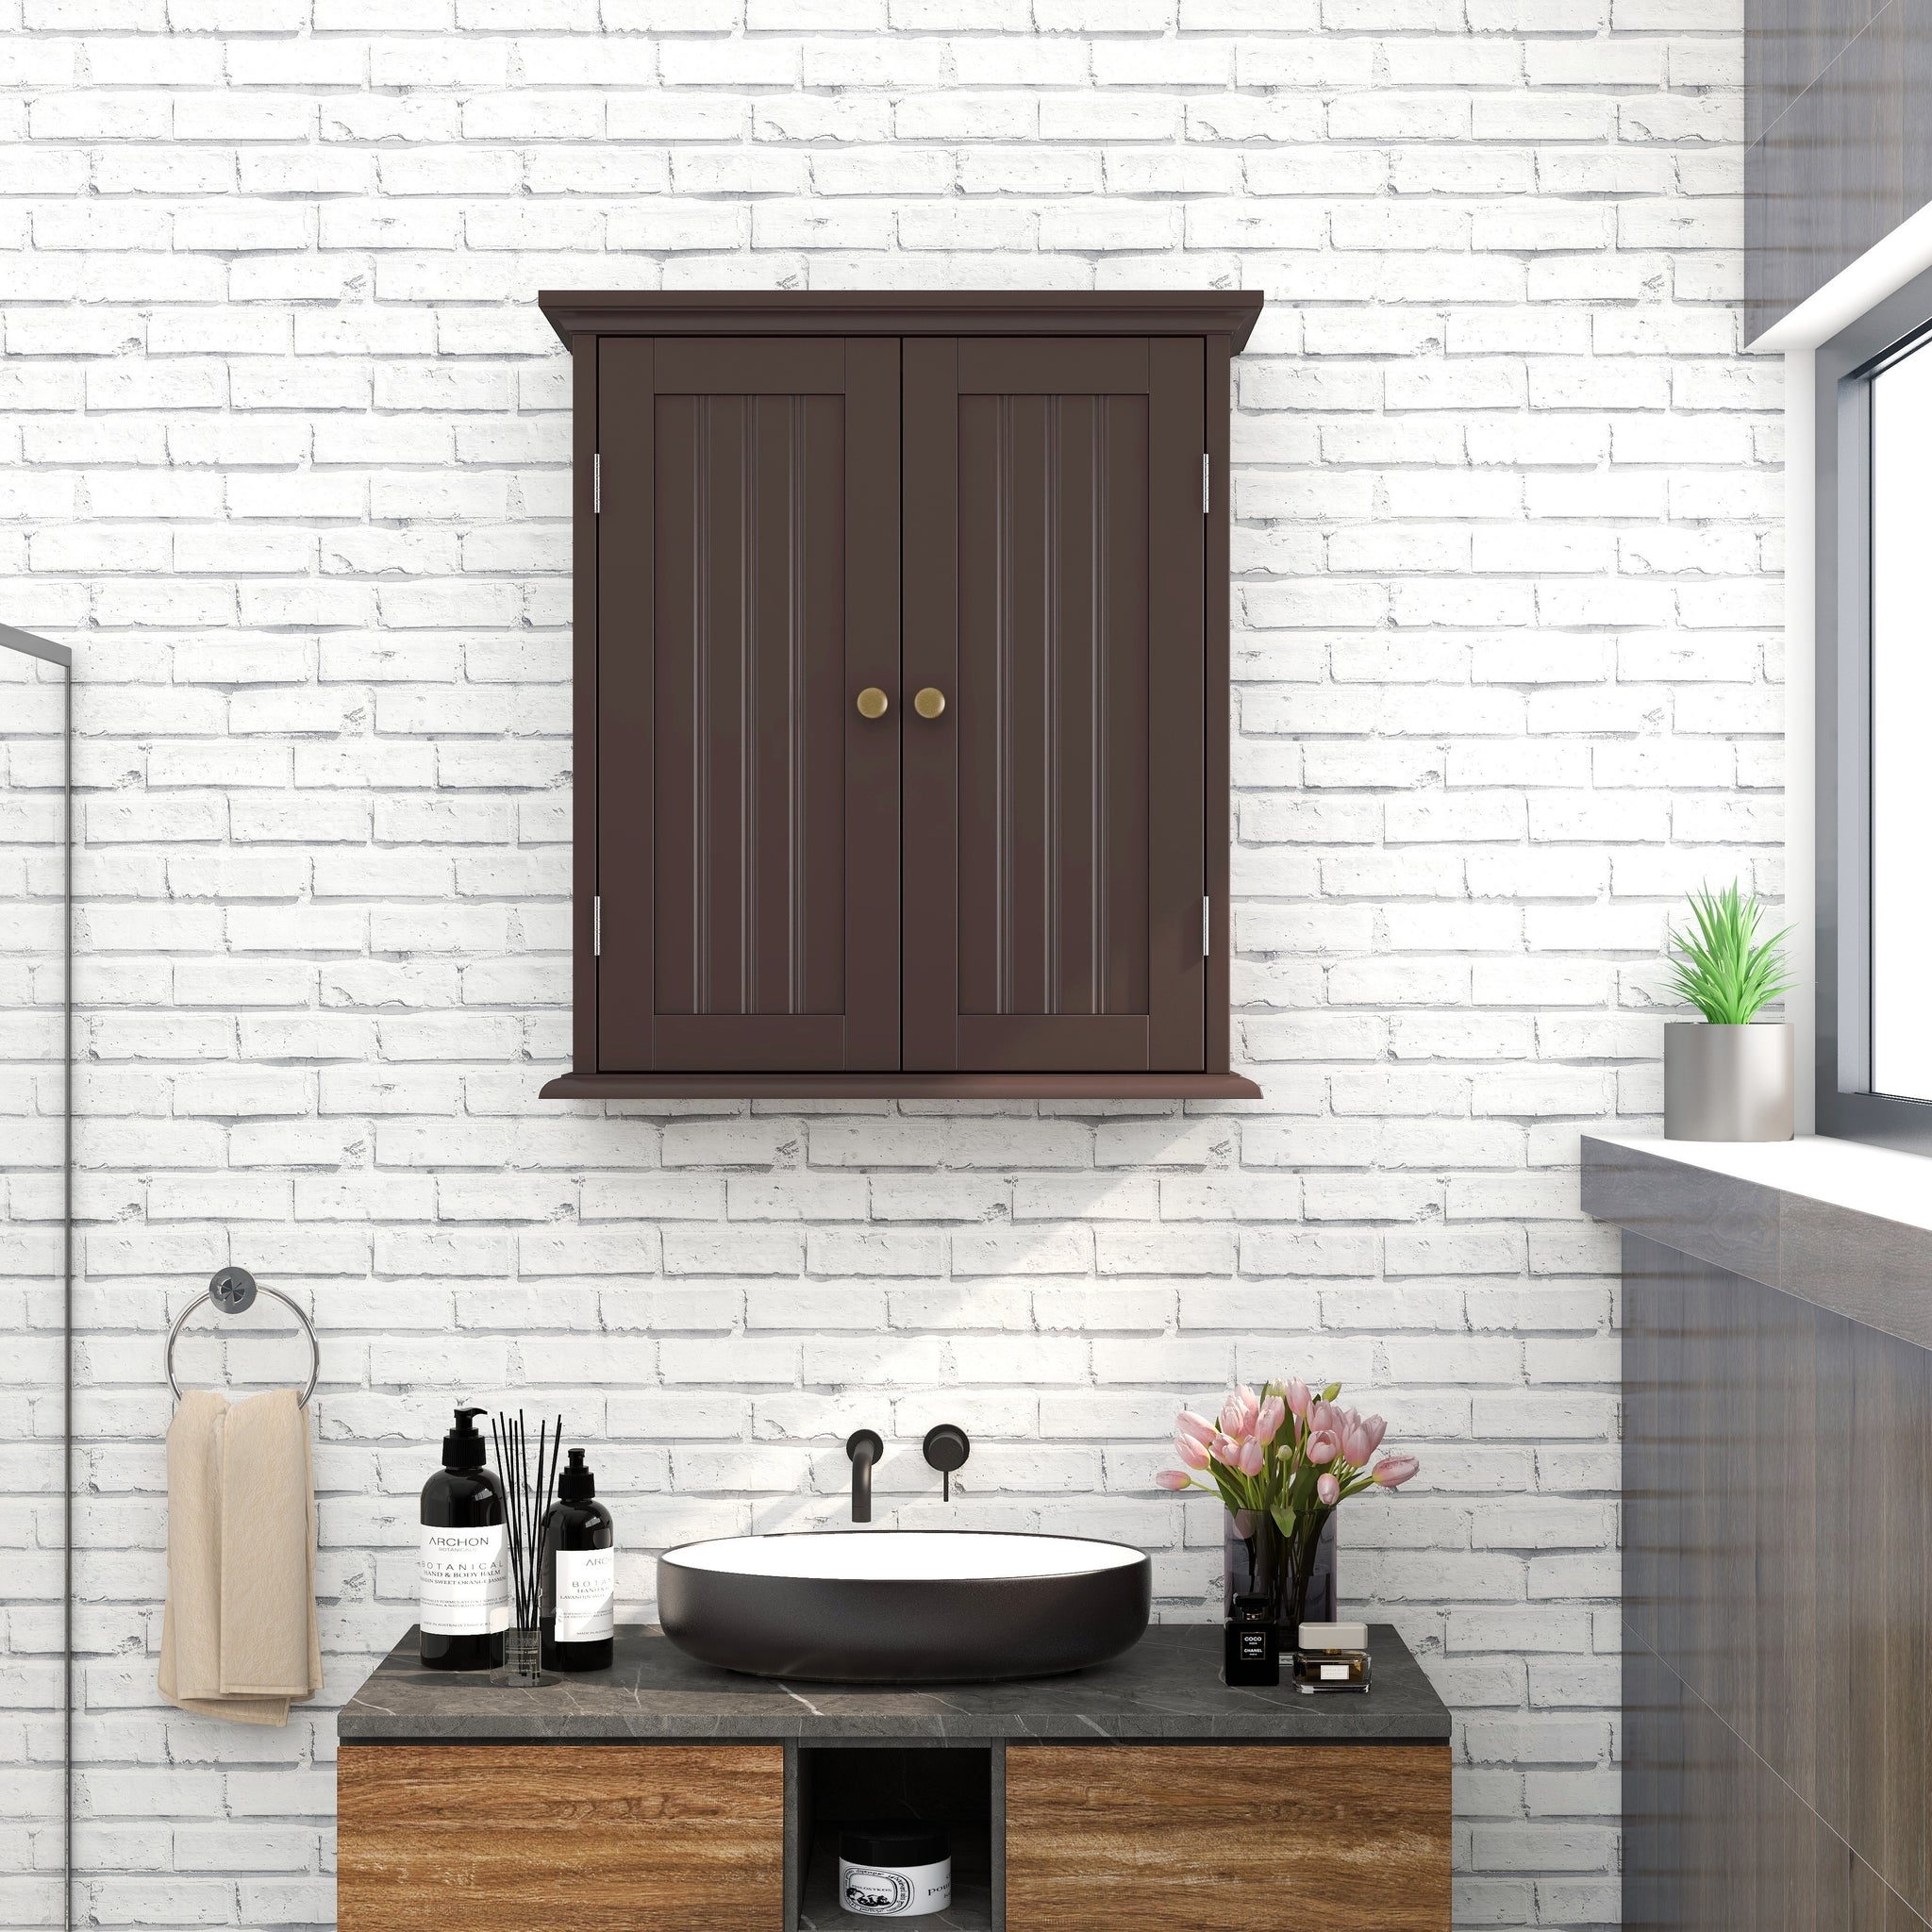 GOAWGO Narrow Wall Cabinet with a Bathroom Medicine Cabinet Door, Small  Wall Cabinet, Towel Shelf for Bathroom,Wooden Bathroom Storage Cabinet,  with